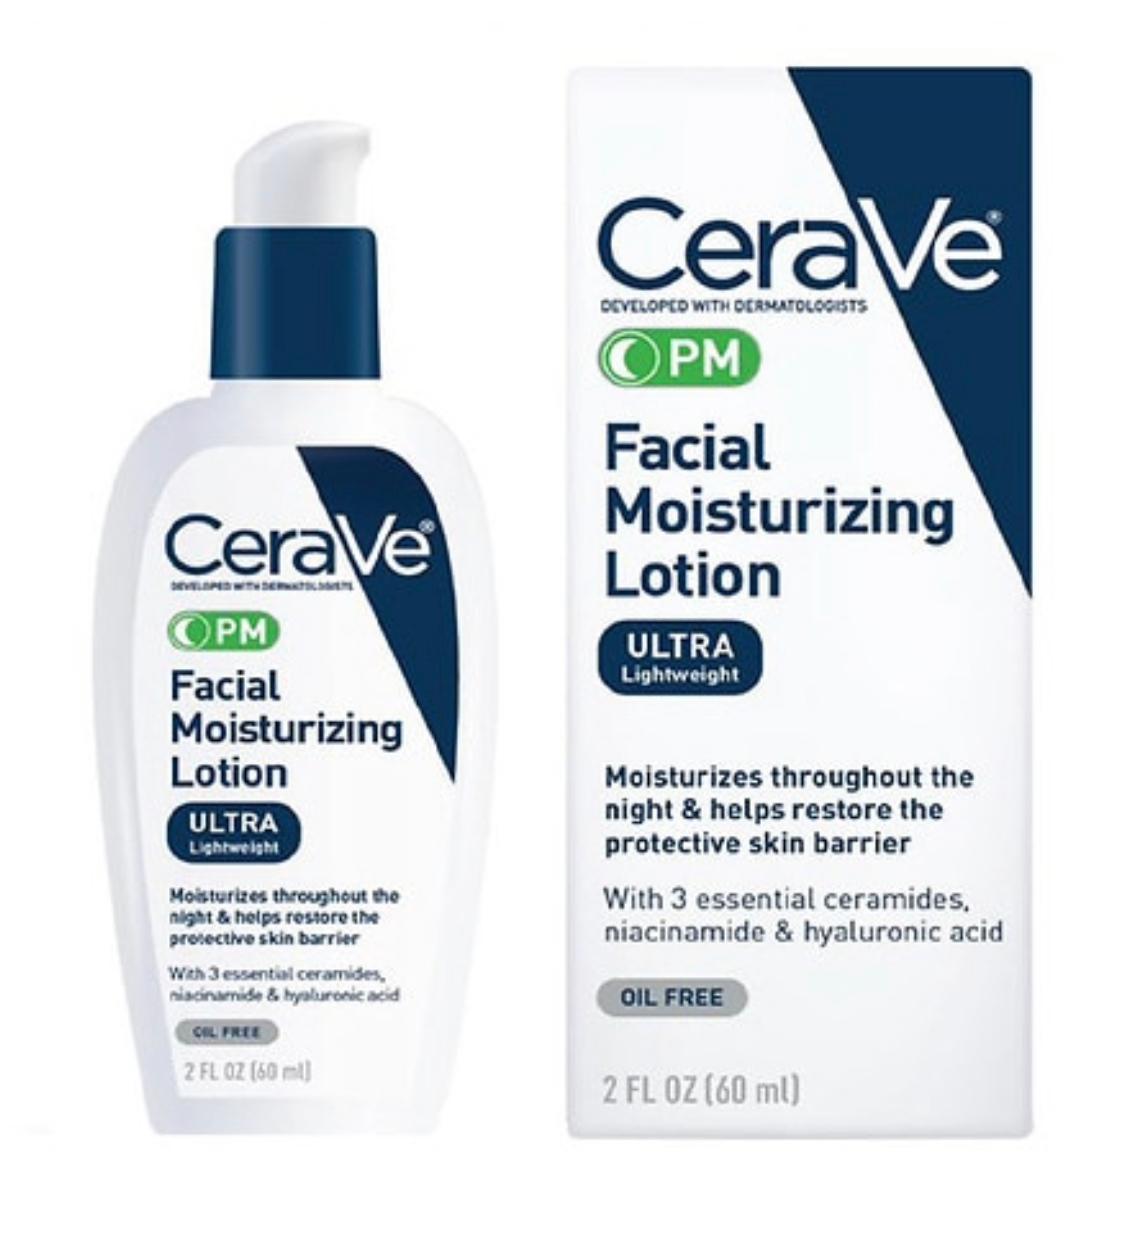 Cerave PM Facial Moisturizing Lotion 60ml